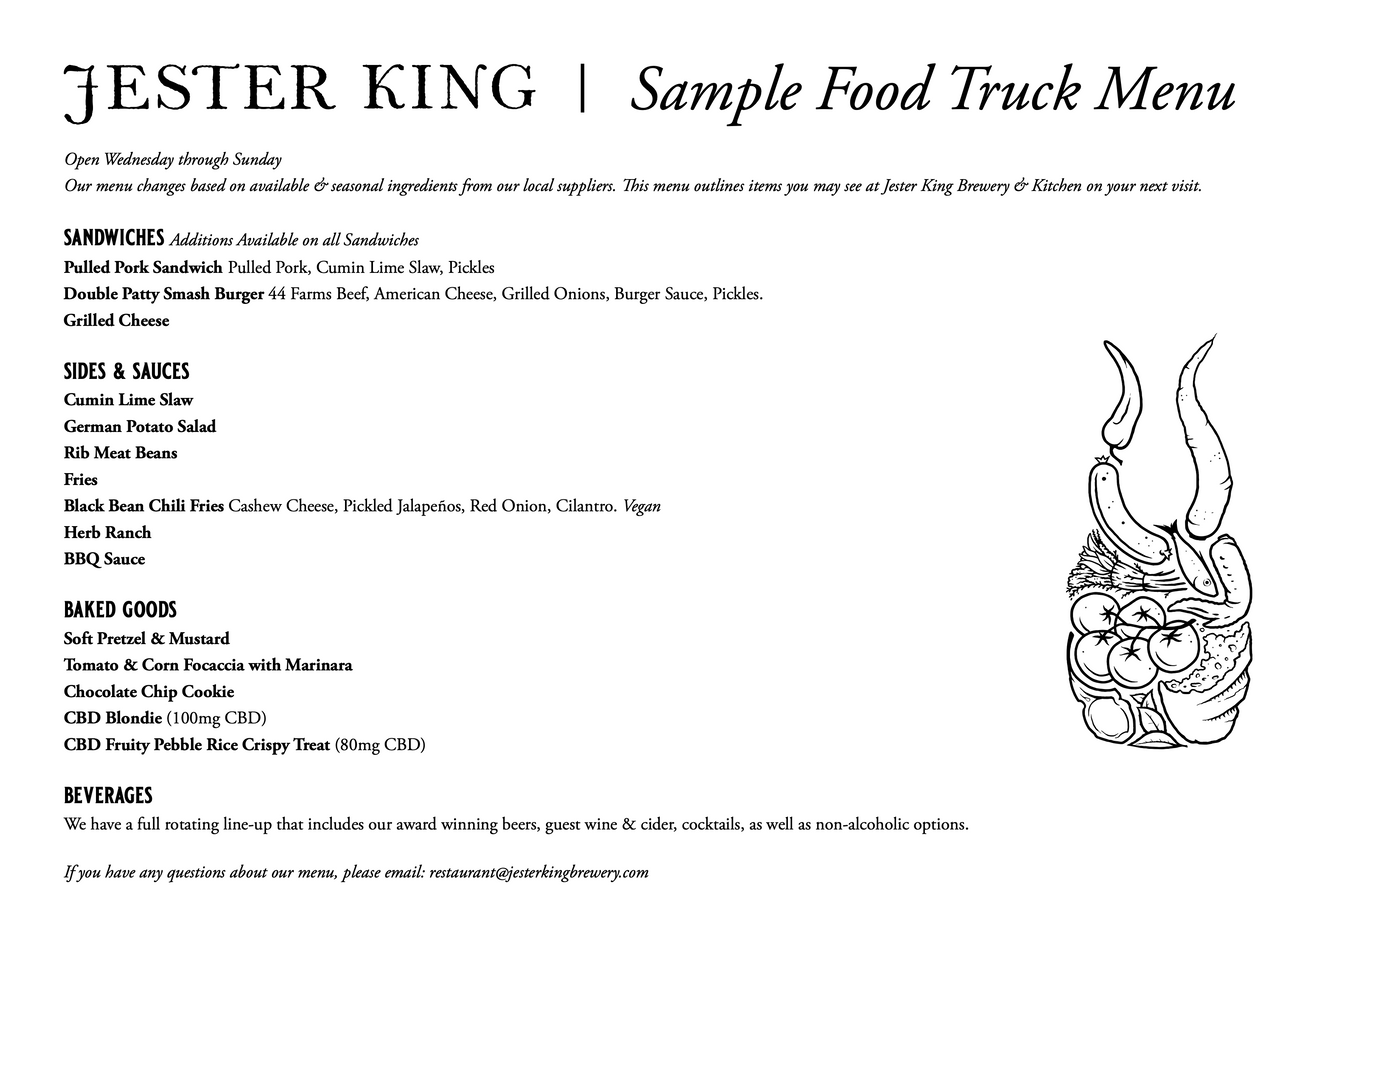 Click here for Sample Food Truck Menu.png